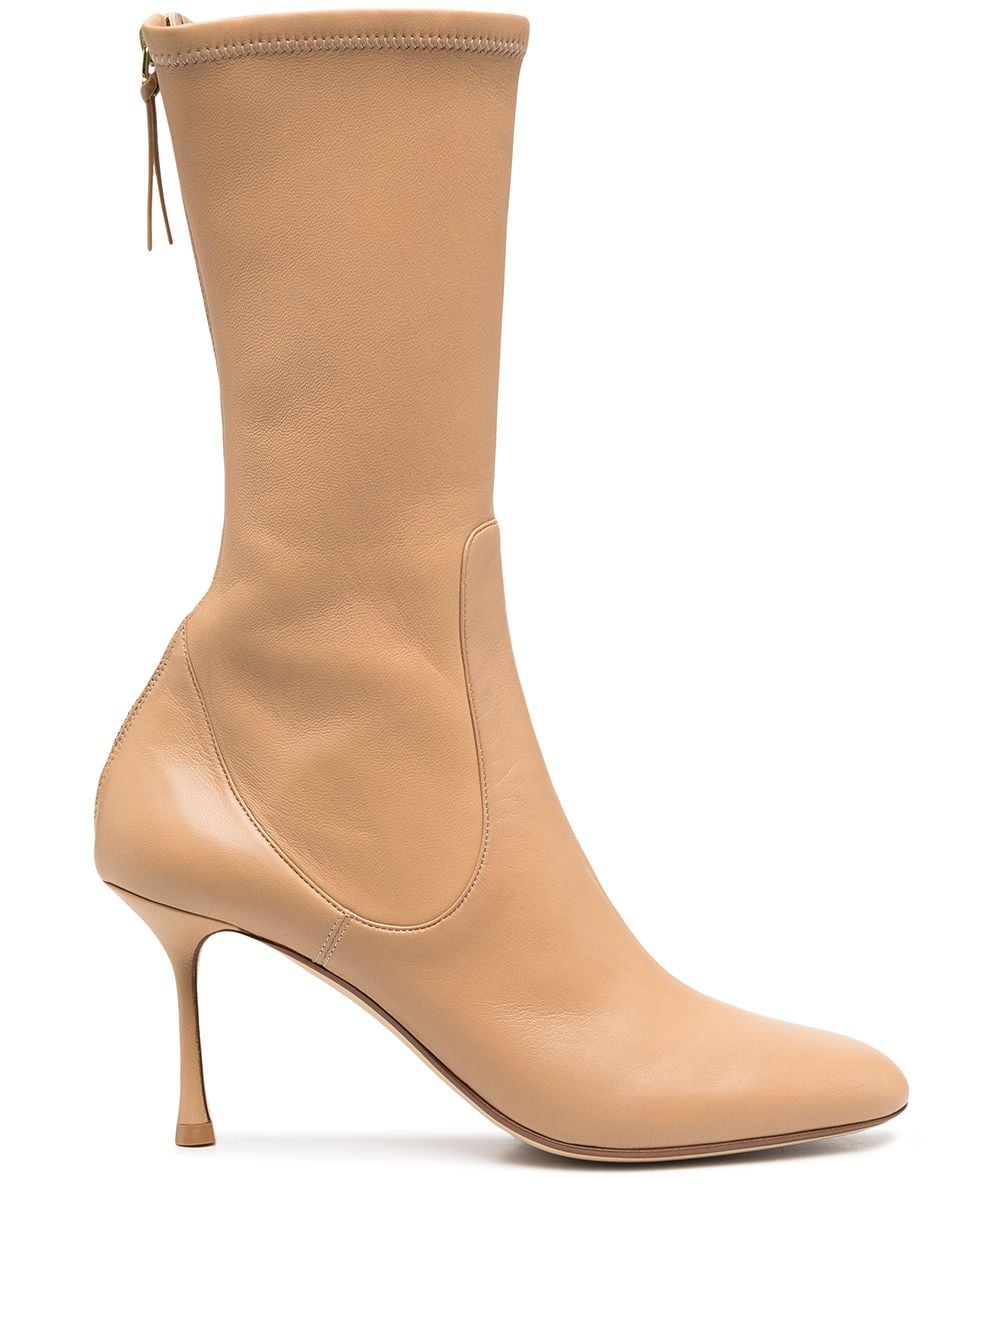 Leather Boots дамски обувки Francesco Russo 849848985_40